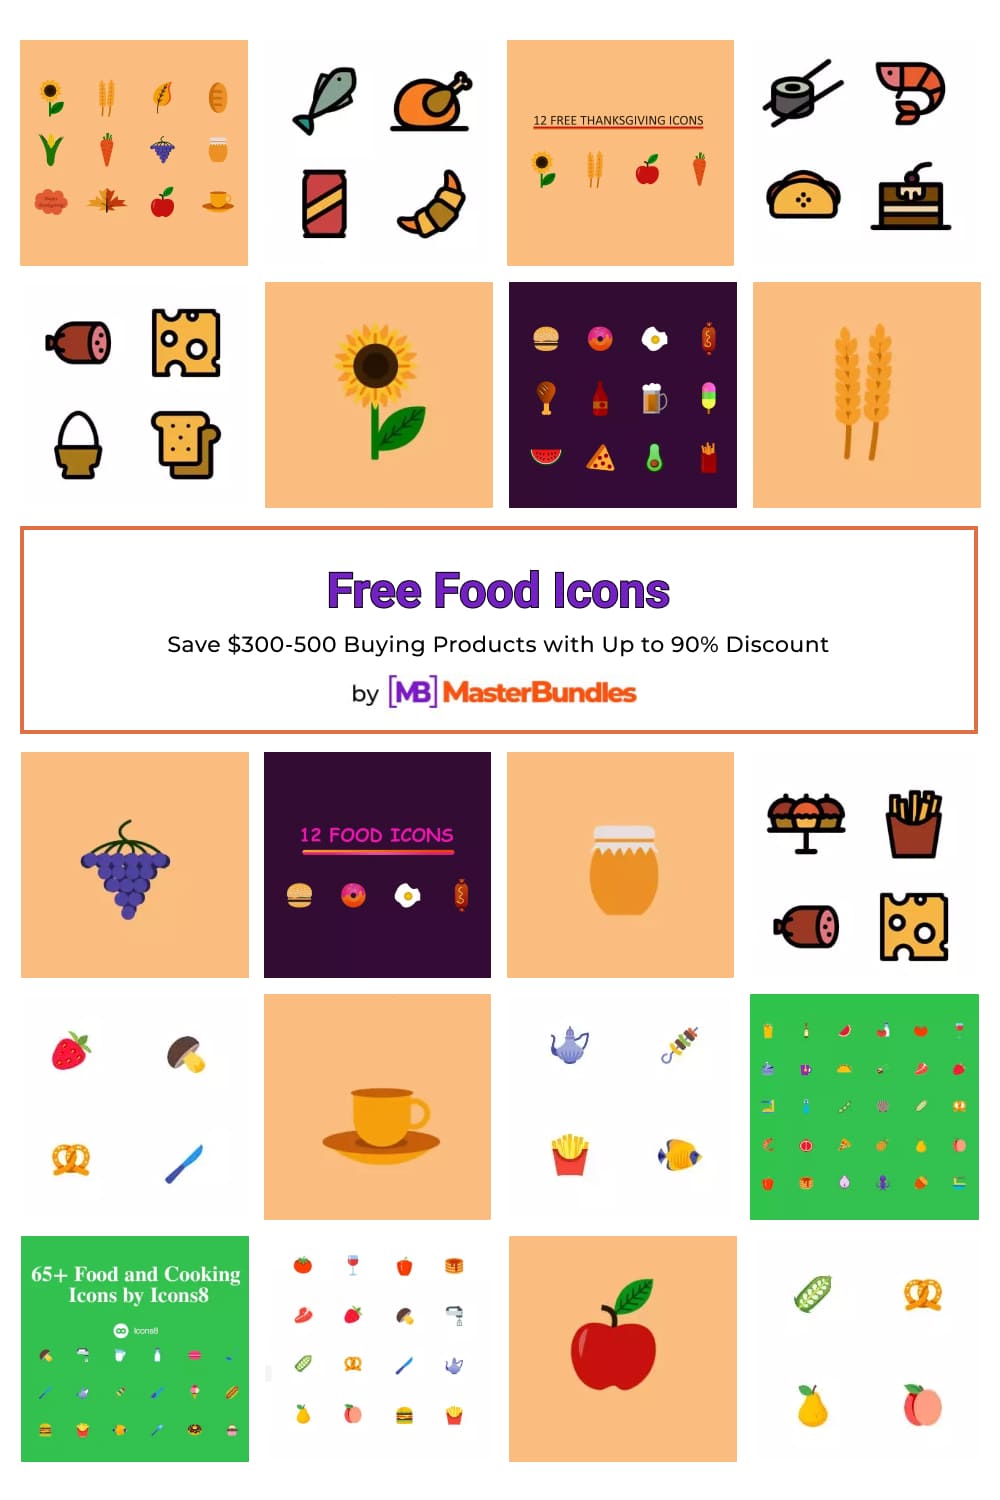 Free Food Icons Pinterest image.